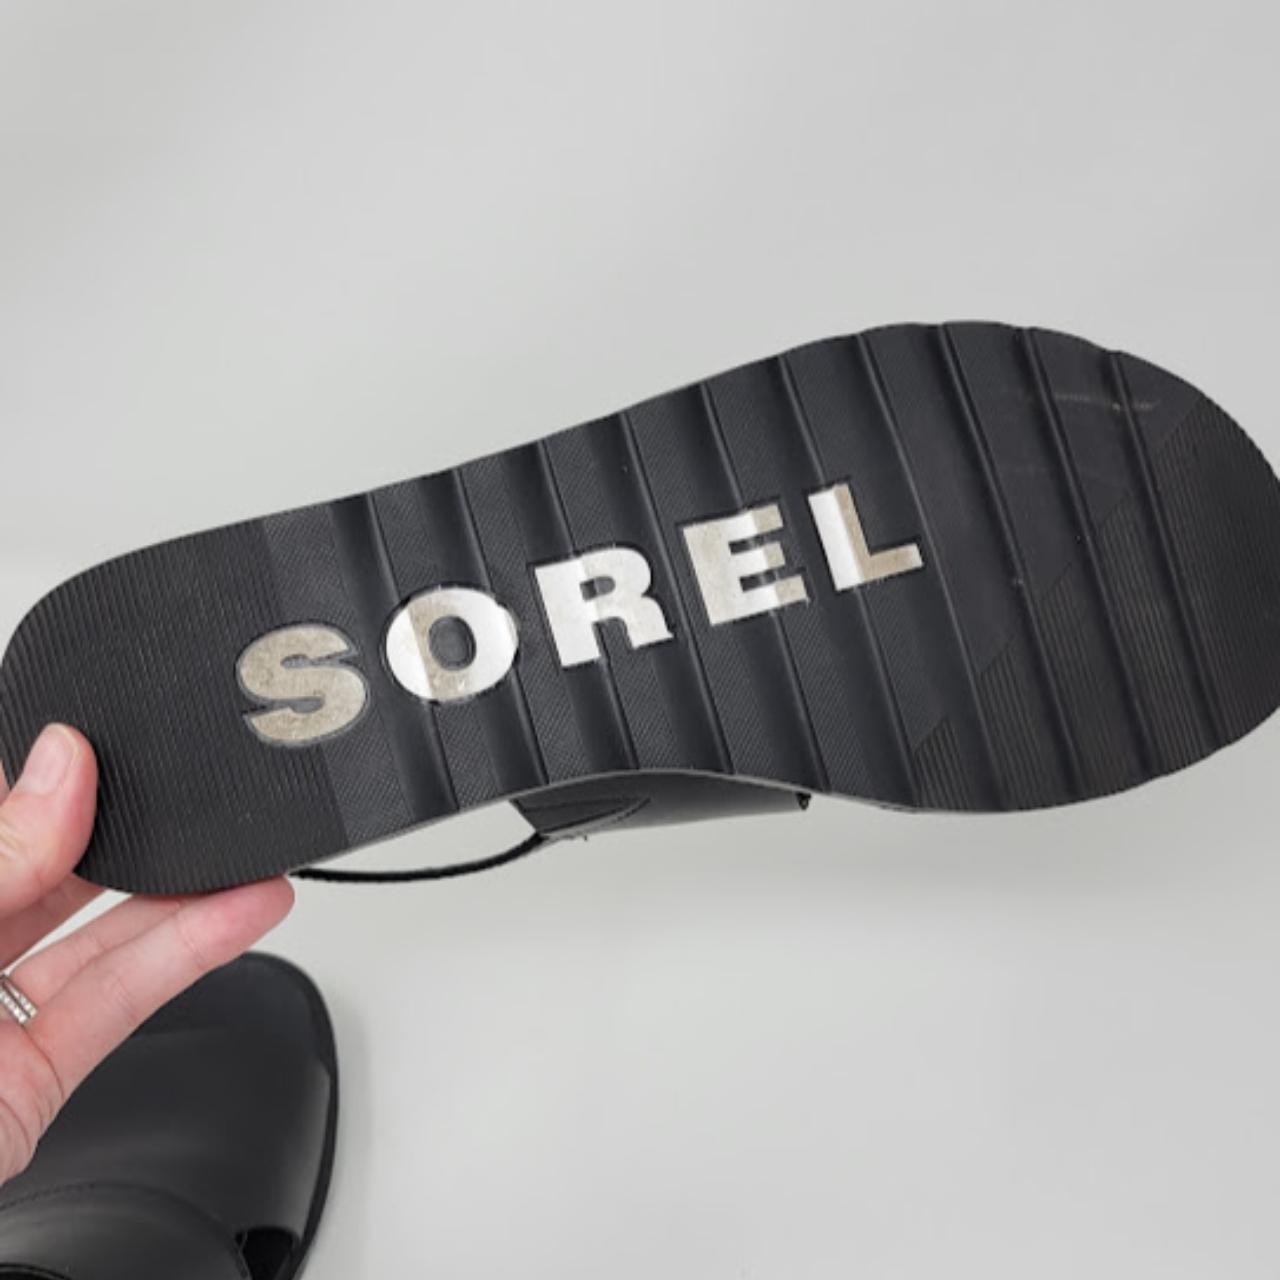 Sorel Women's Black Sandals (2)